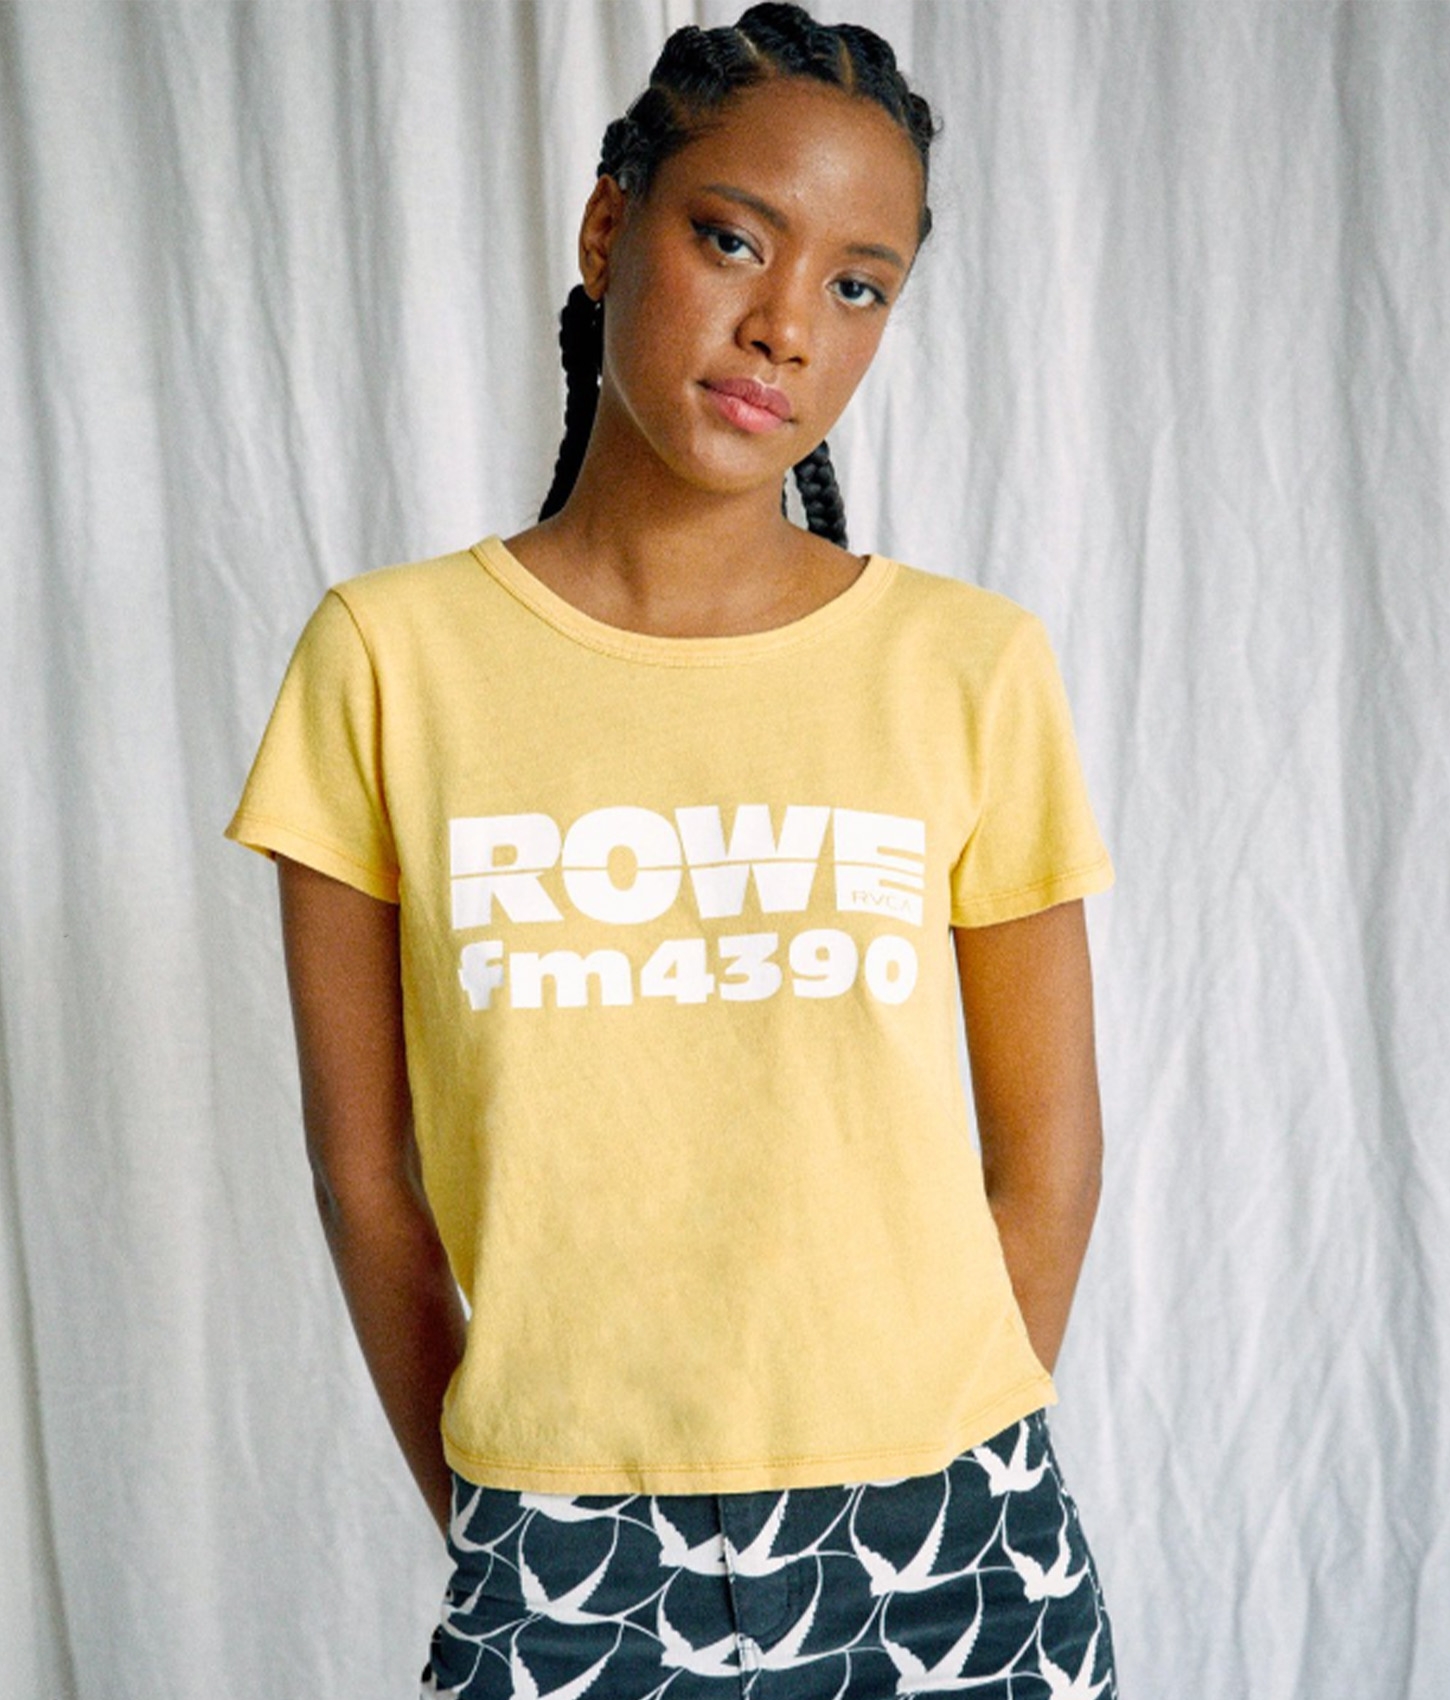 Camille Rowe FM 4390 T-Shirt